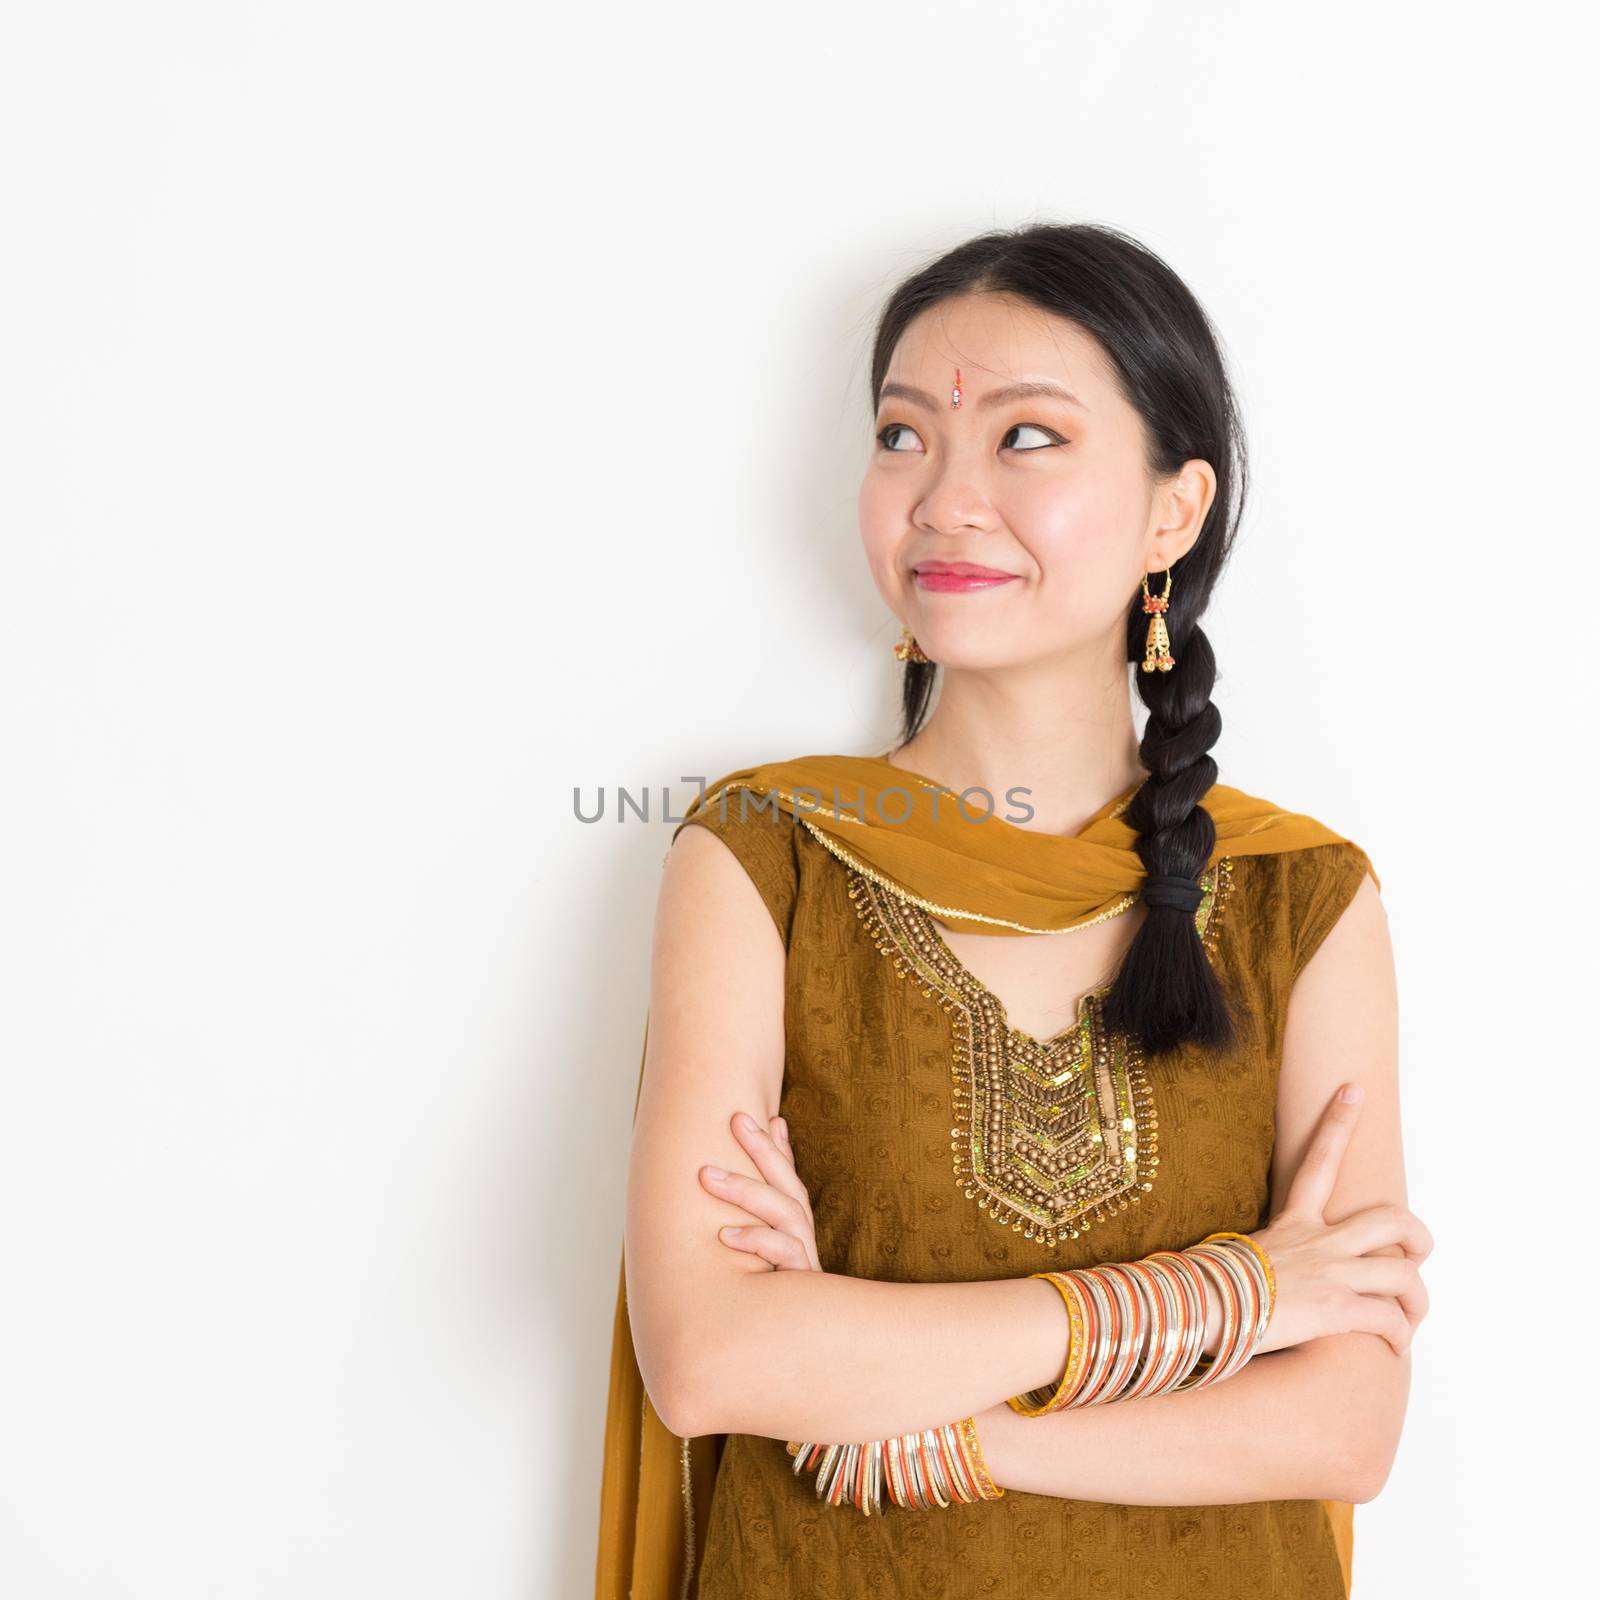 Mixed race Indian girl in sari dress by szefei